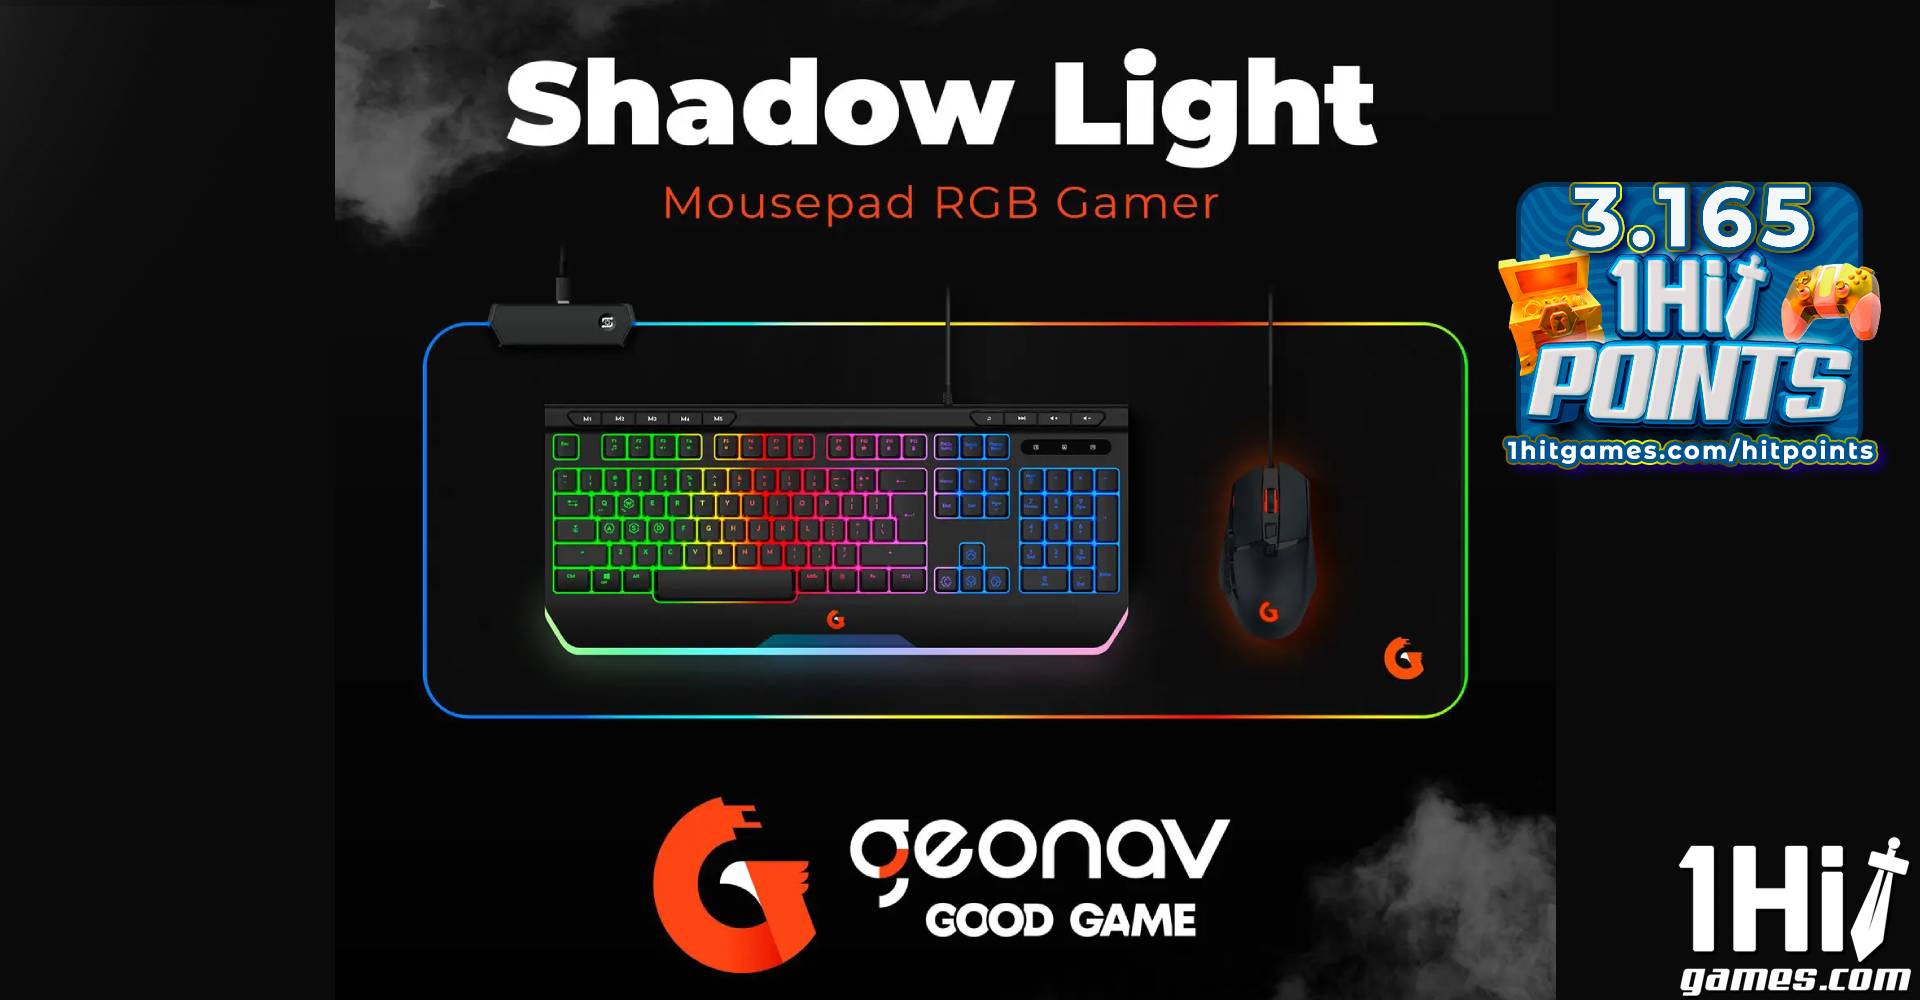 Geonav Mousepad Gamer Shadow Light